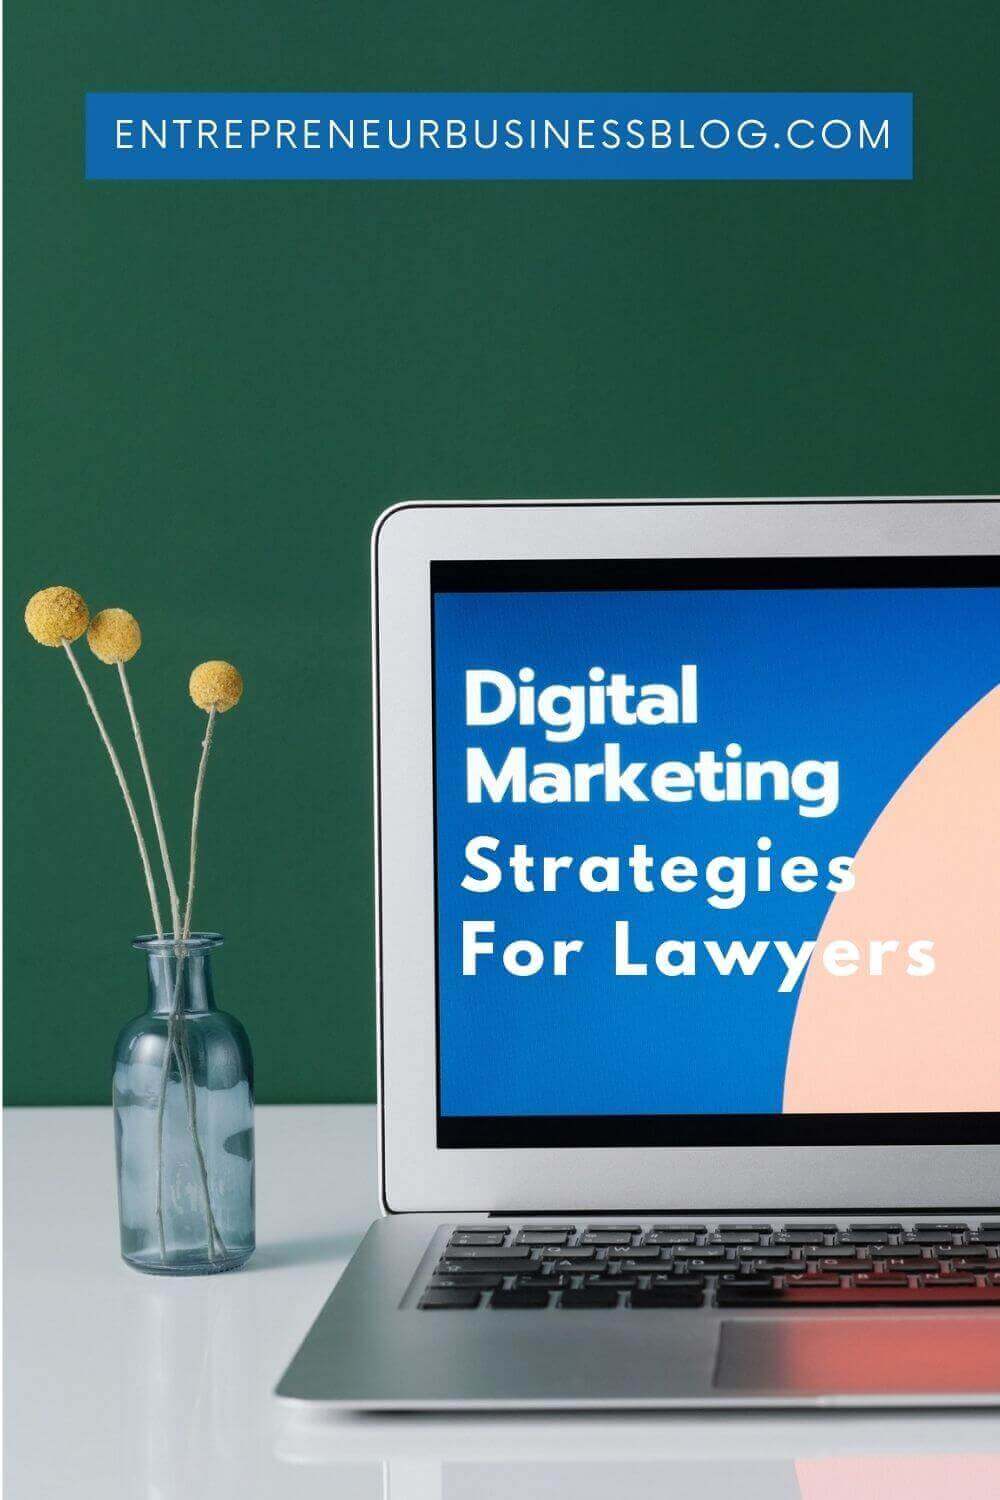 Digital marketing strategies for lawyers